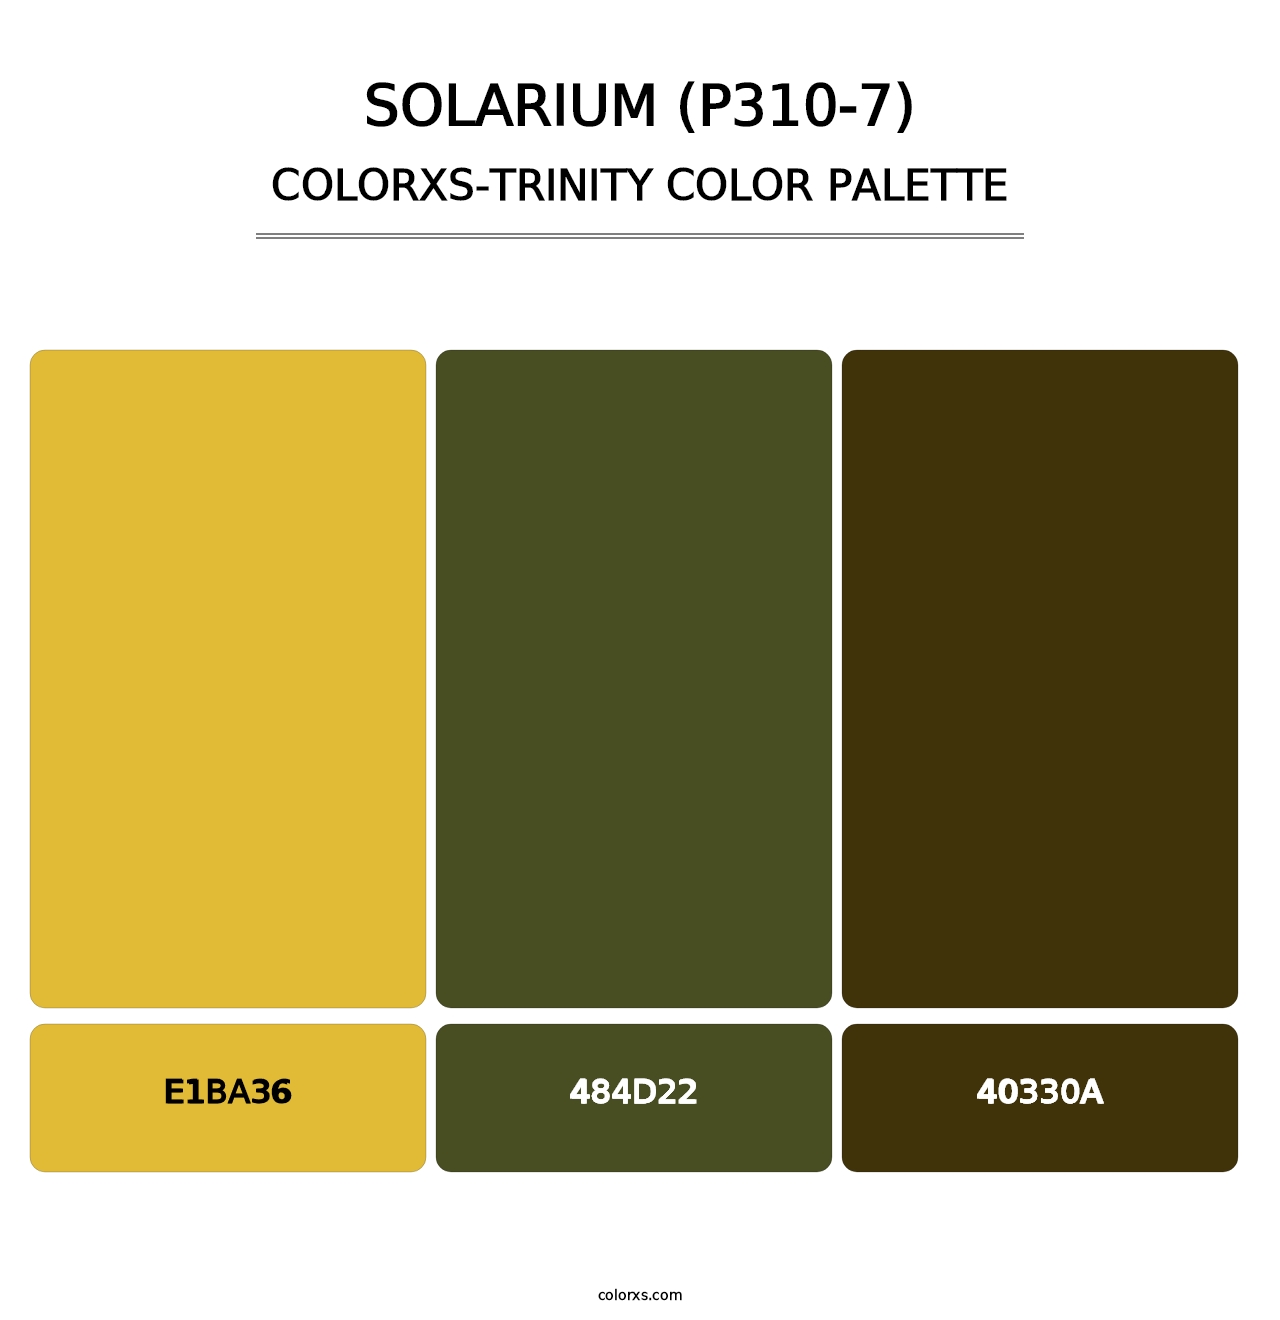 Solarium (P310-7) - Colorxs Trinity Palette